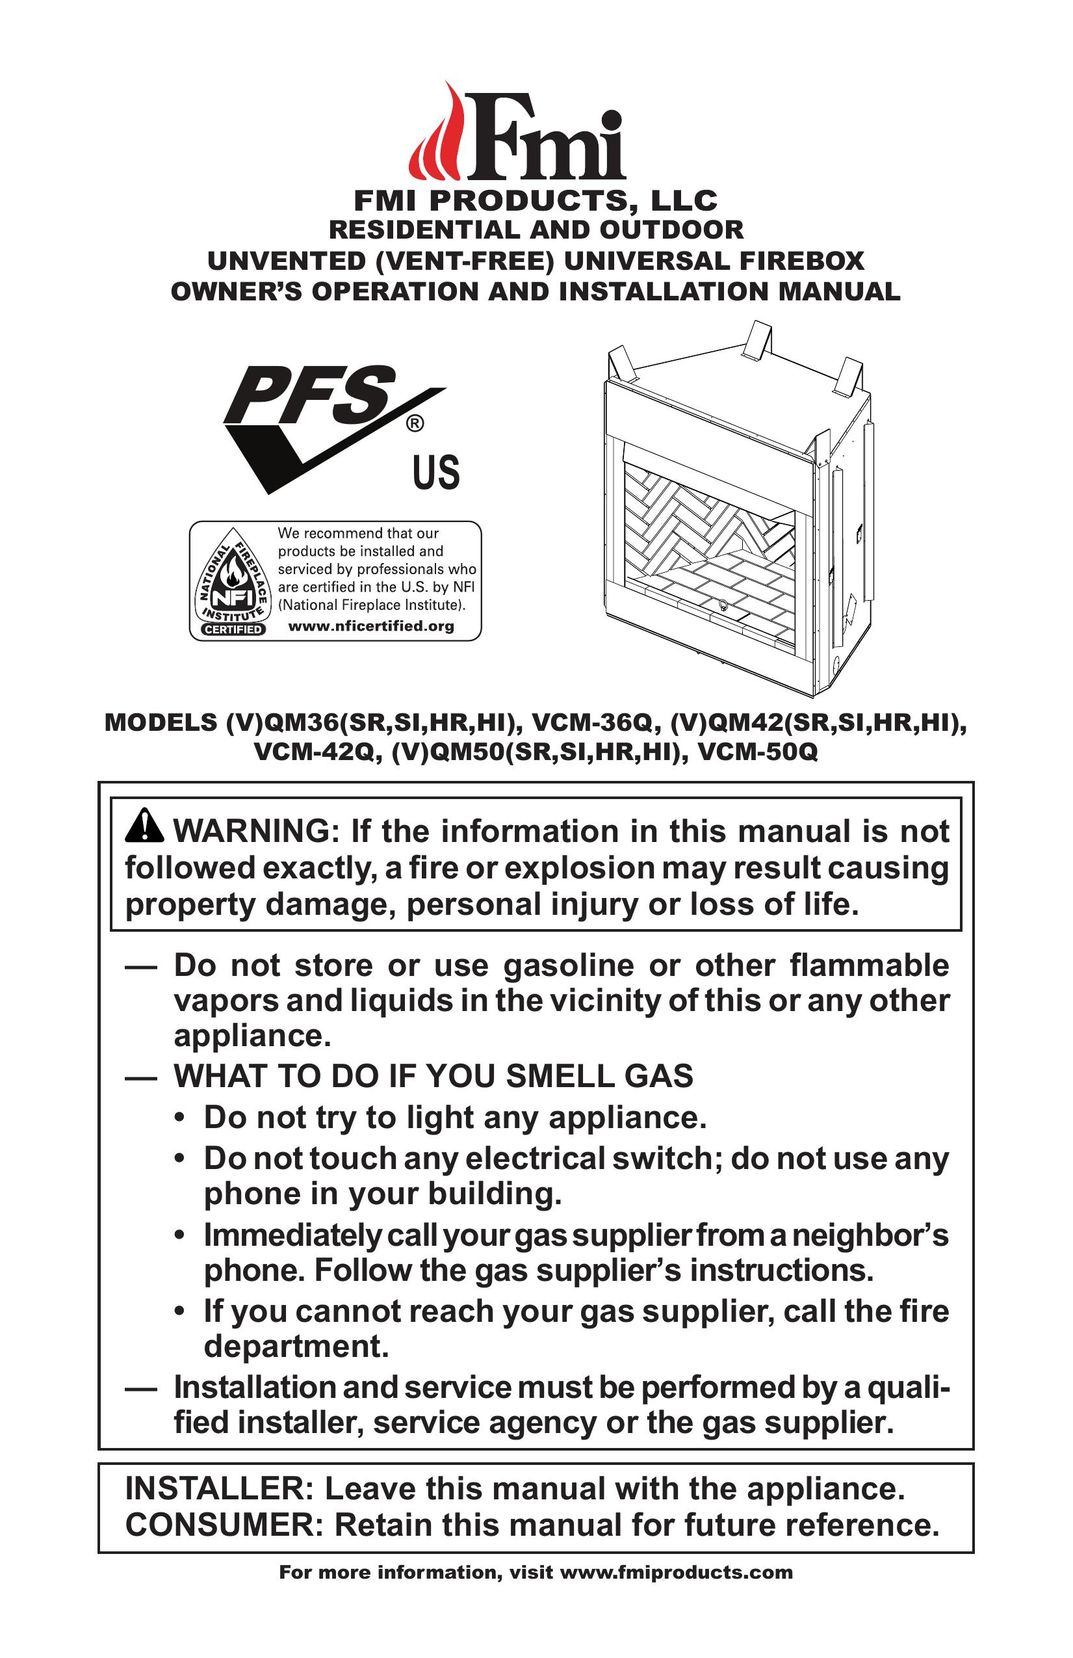 FMI (V)QM50(SR,SI,HR,HI) Indoor Fireplace User Manual